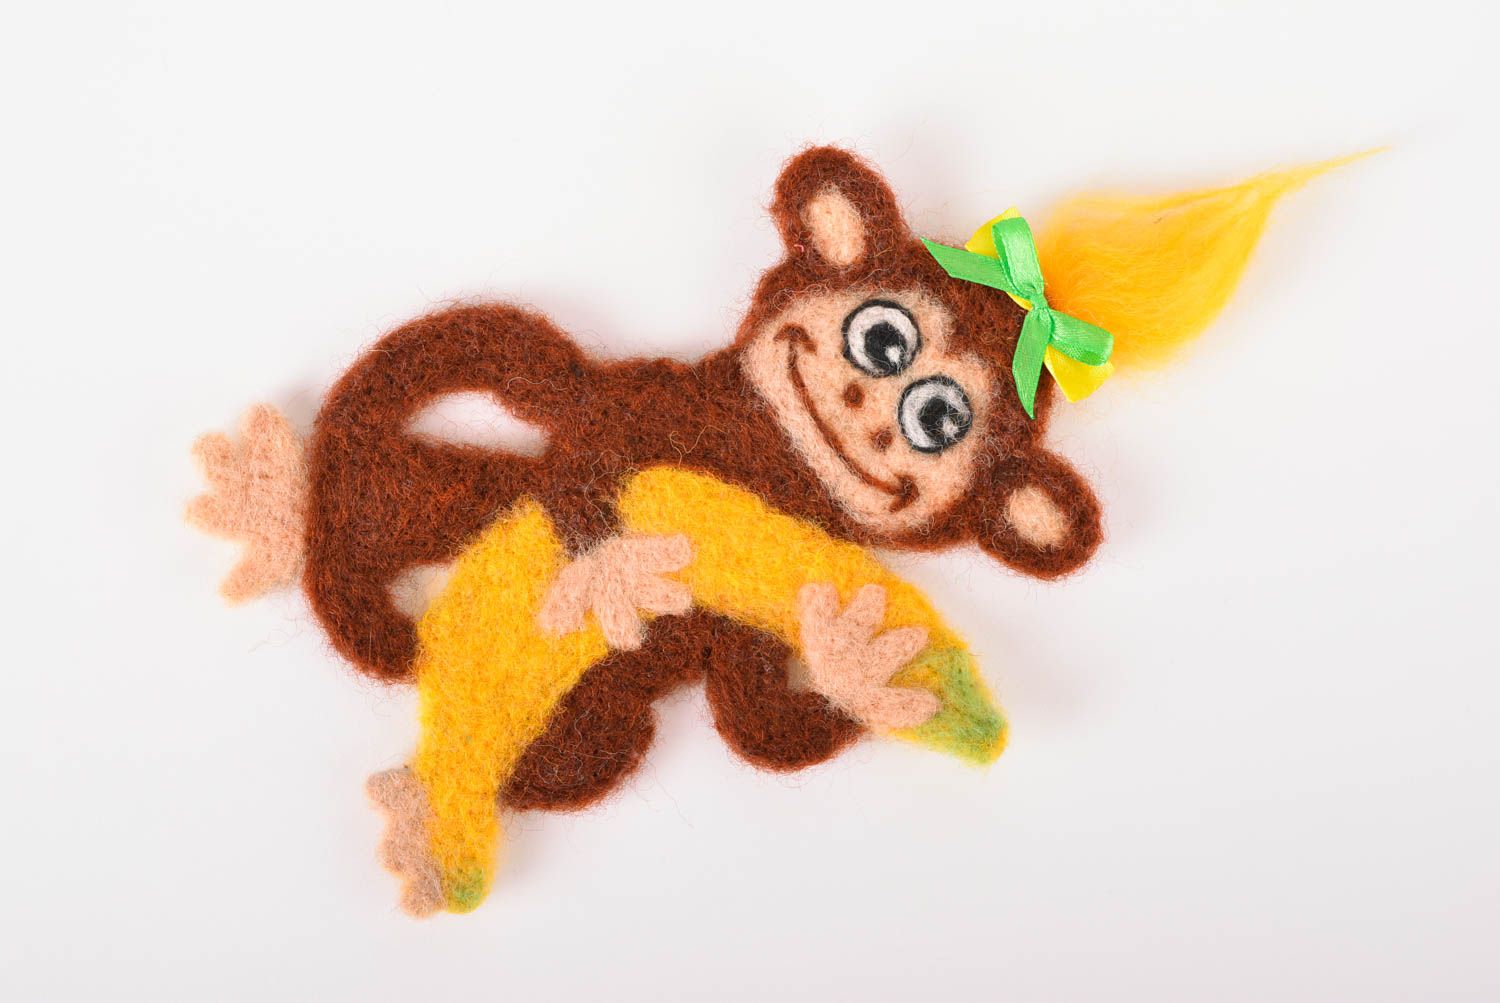 Imán de nevera con forma de mono gracioso regalo original elemento decorativo foto 1